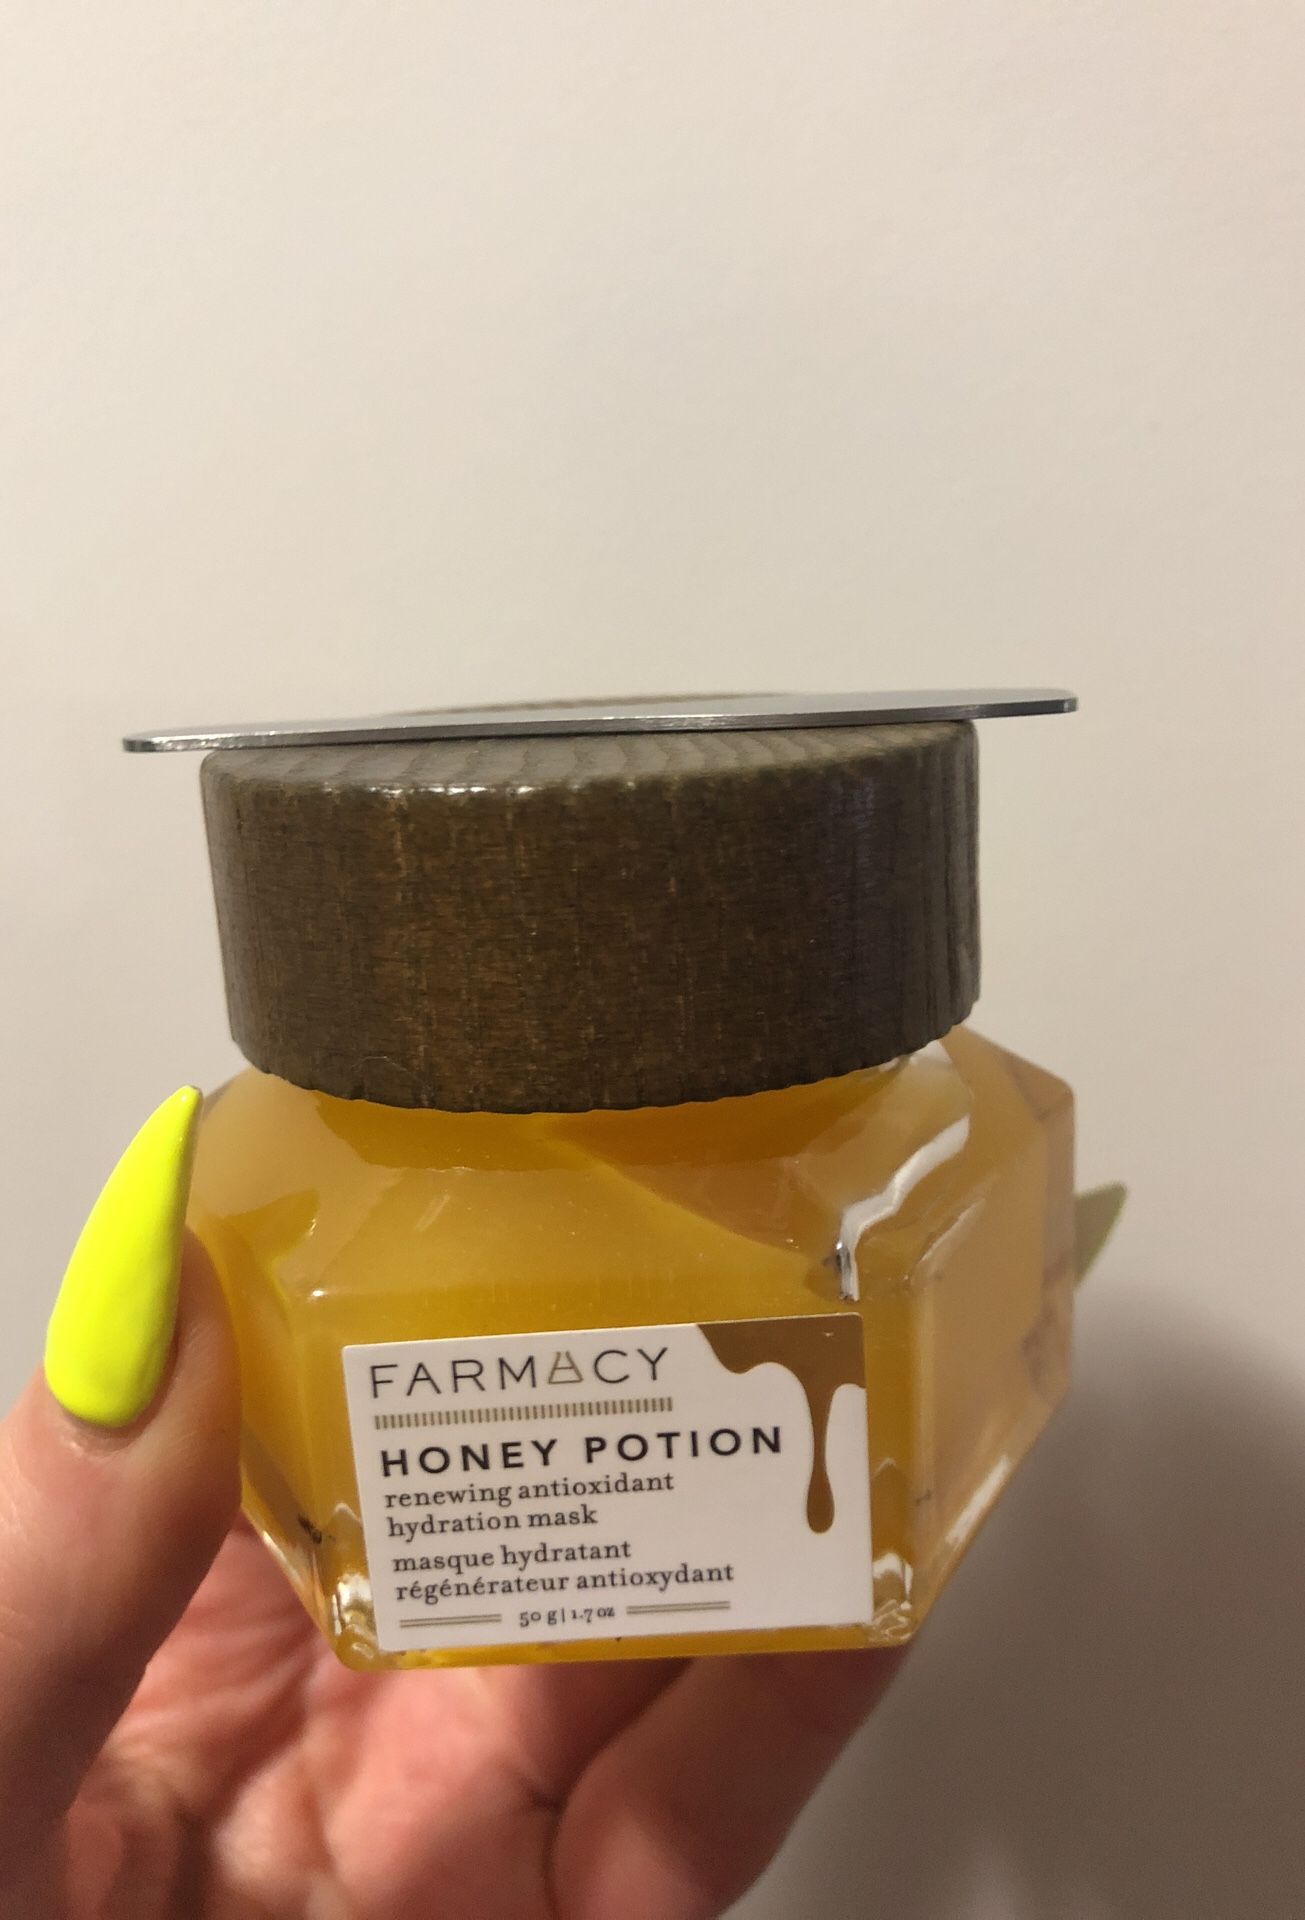 Farmacy Honey Potion face mask